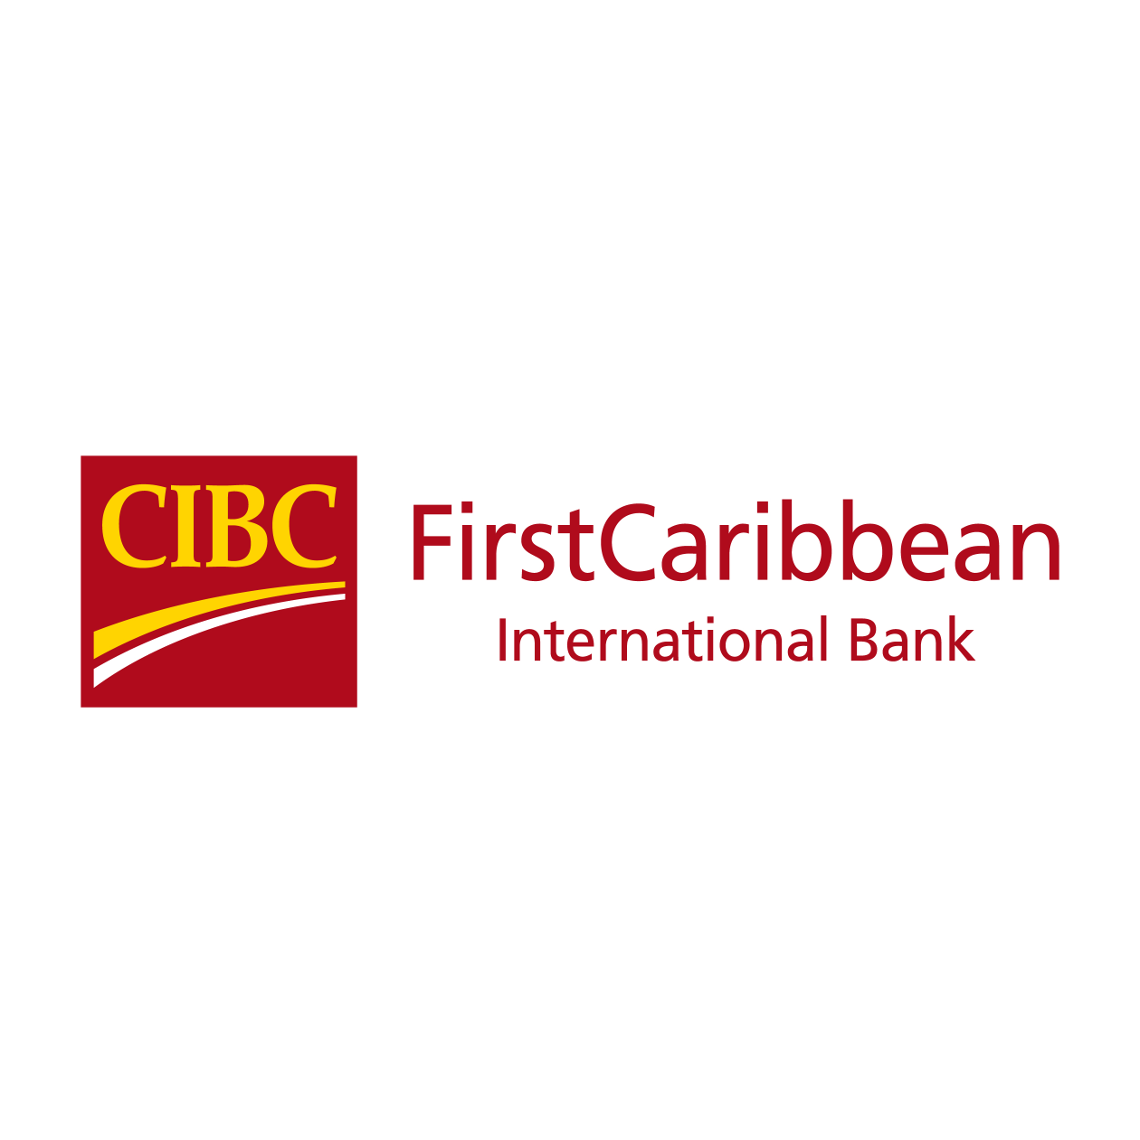 FirstCaribbean International Bank (Barbados) Ltd.